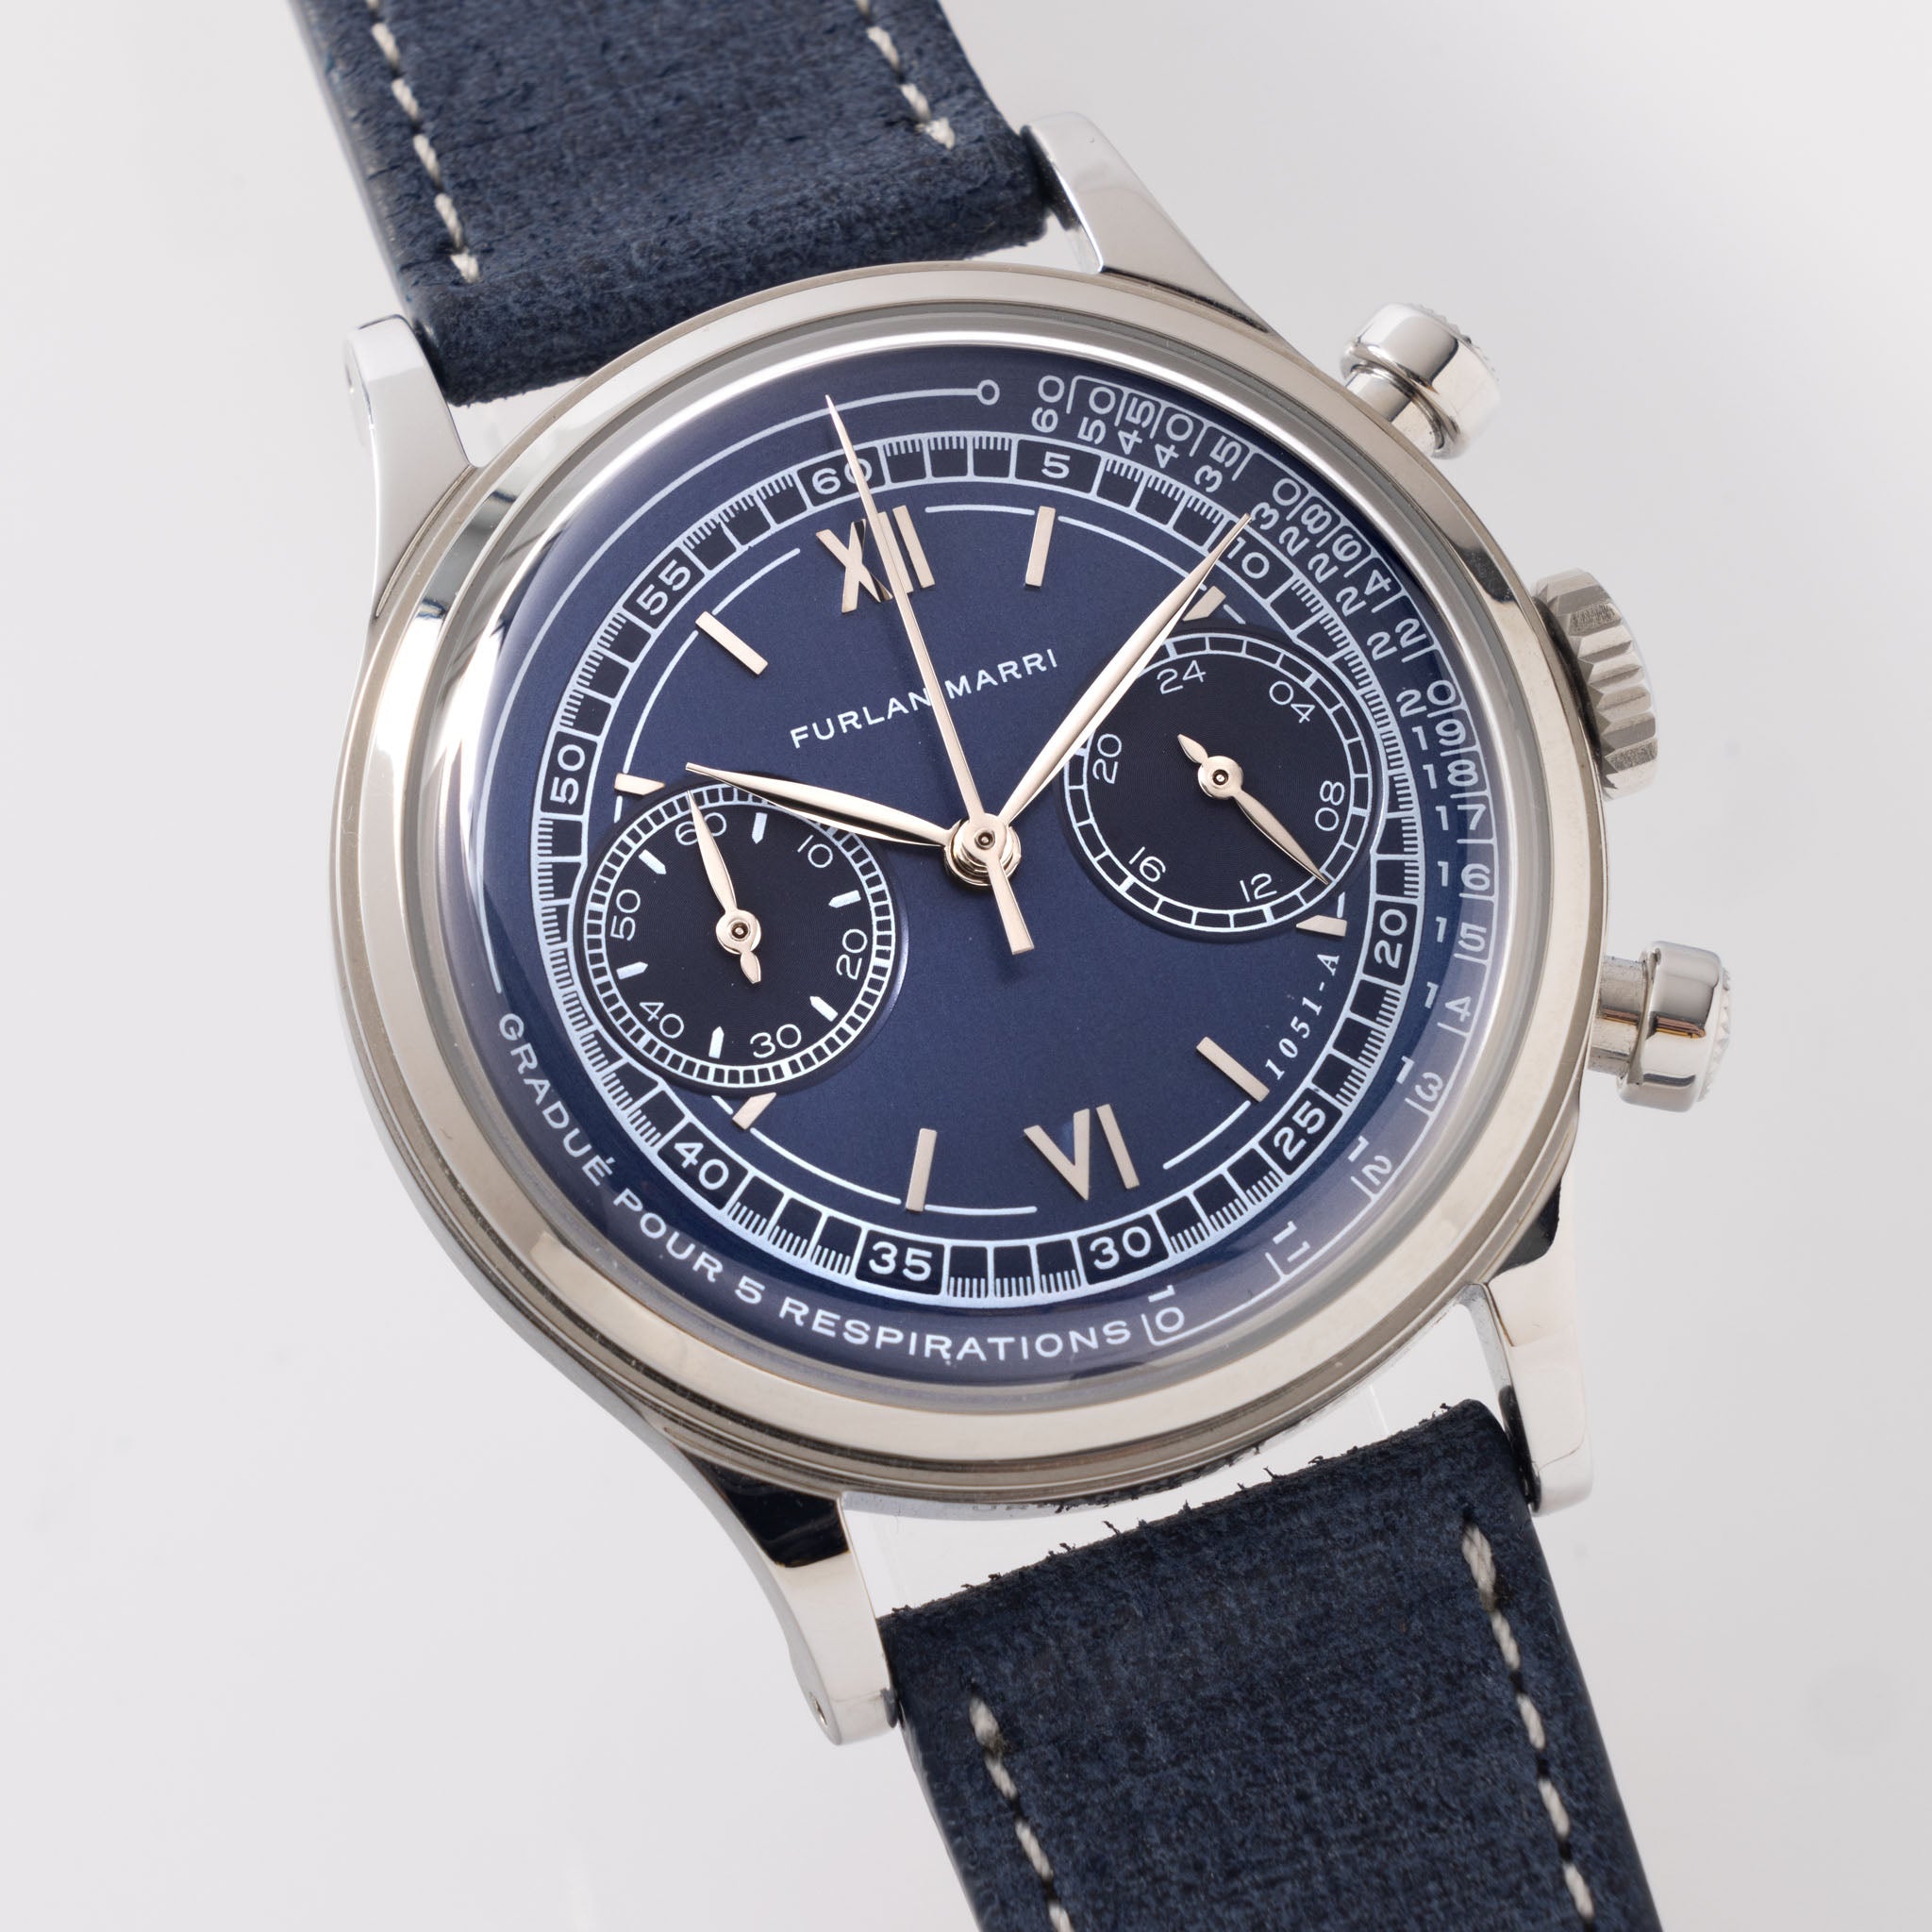 Furlan Marri Mare Blu "Tasti Tondi" Chronograph Ref 1051-A